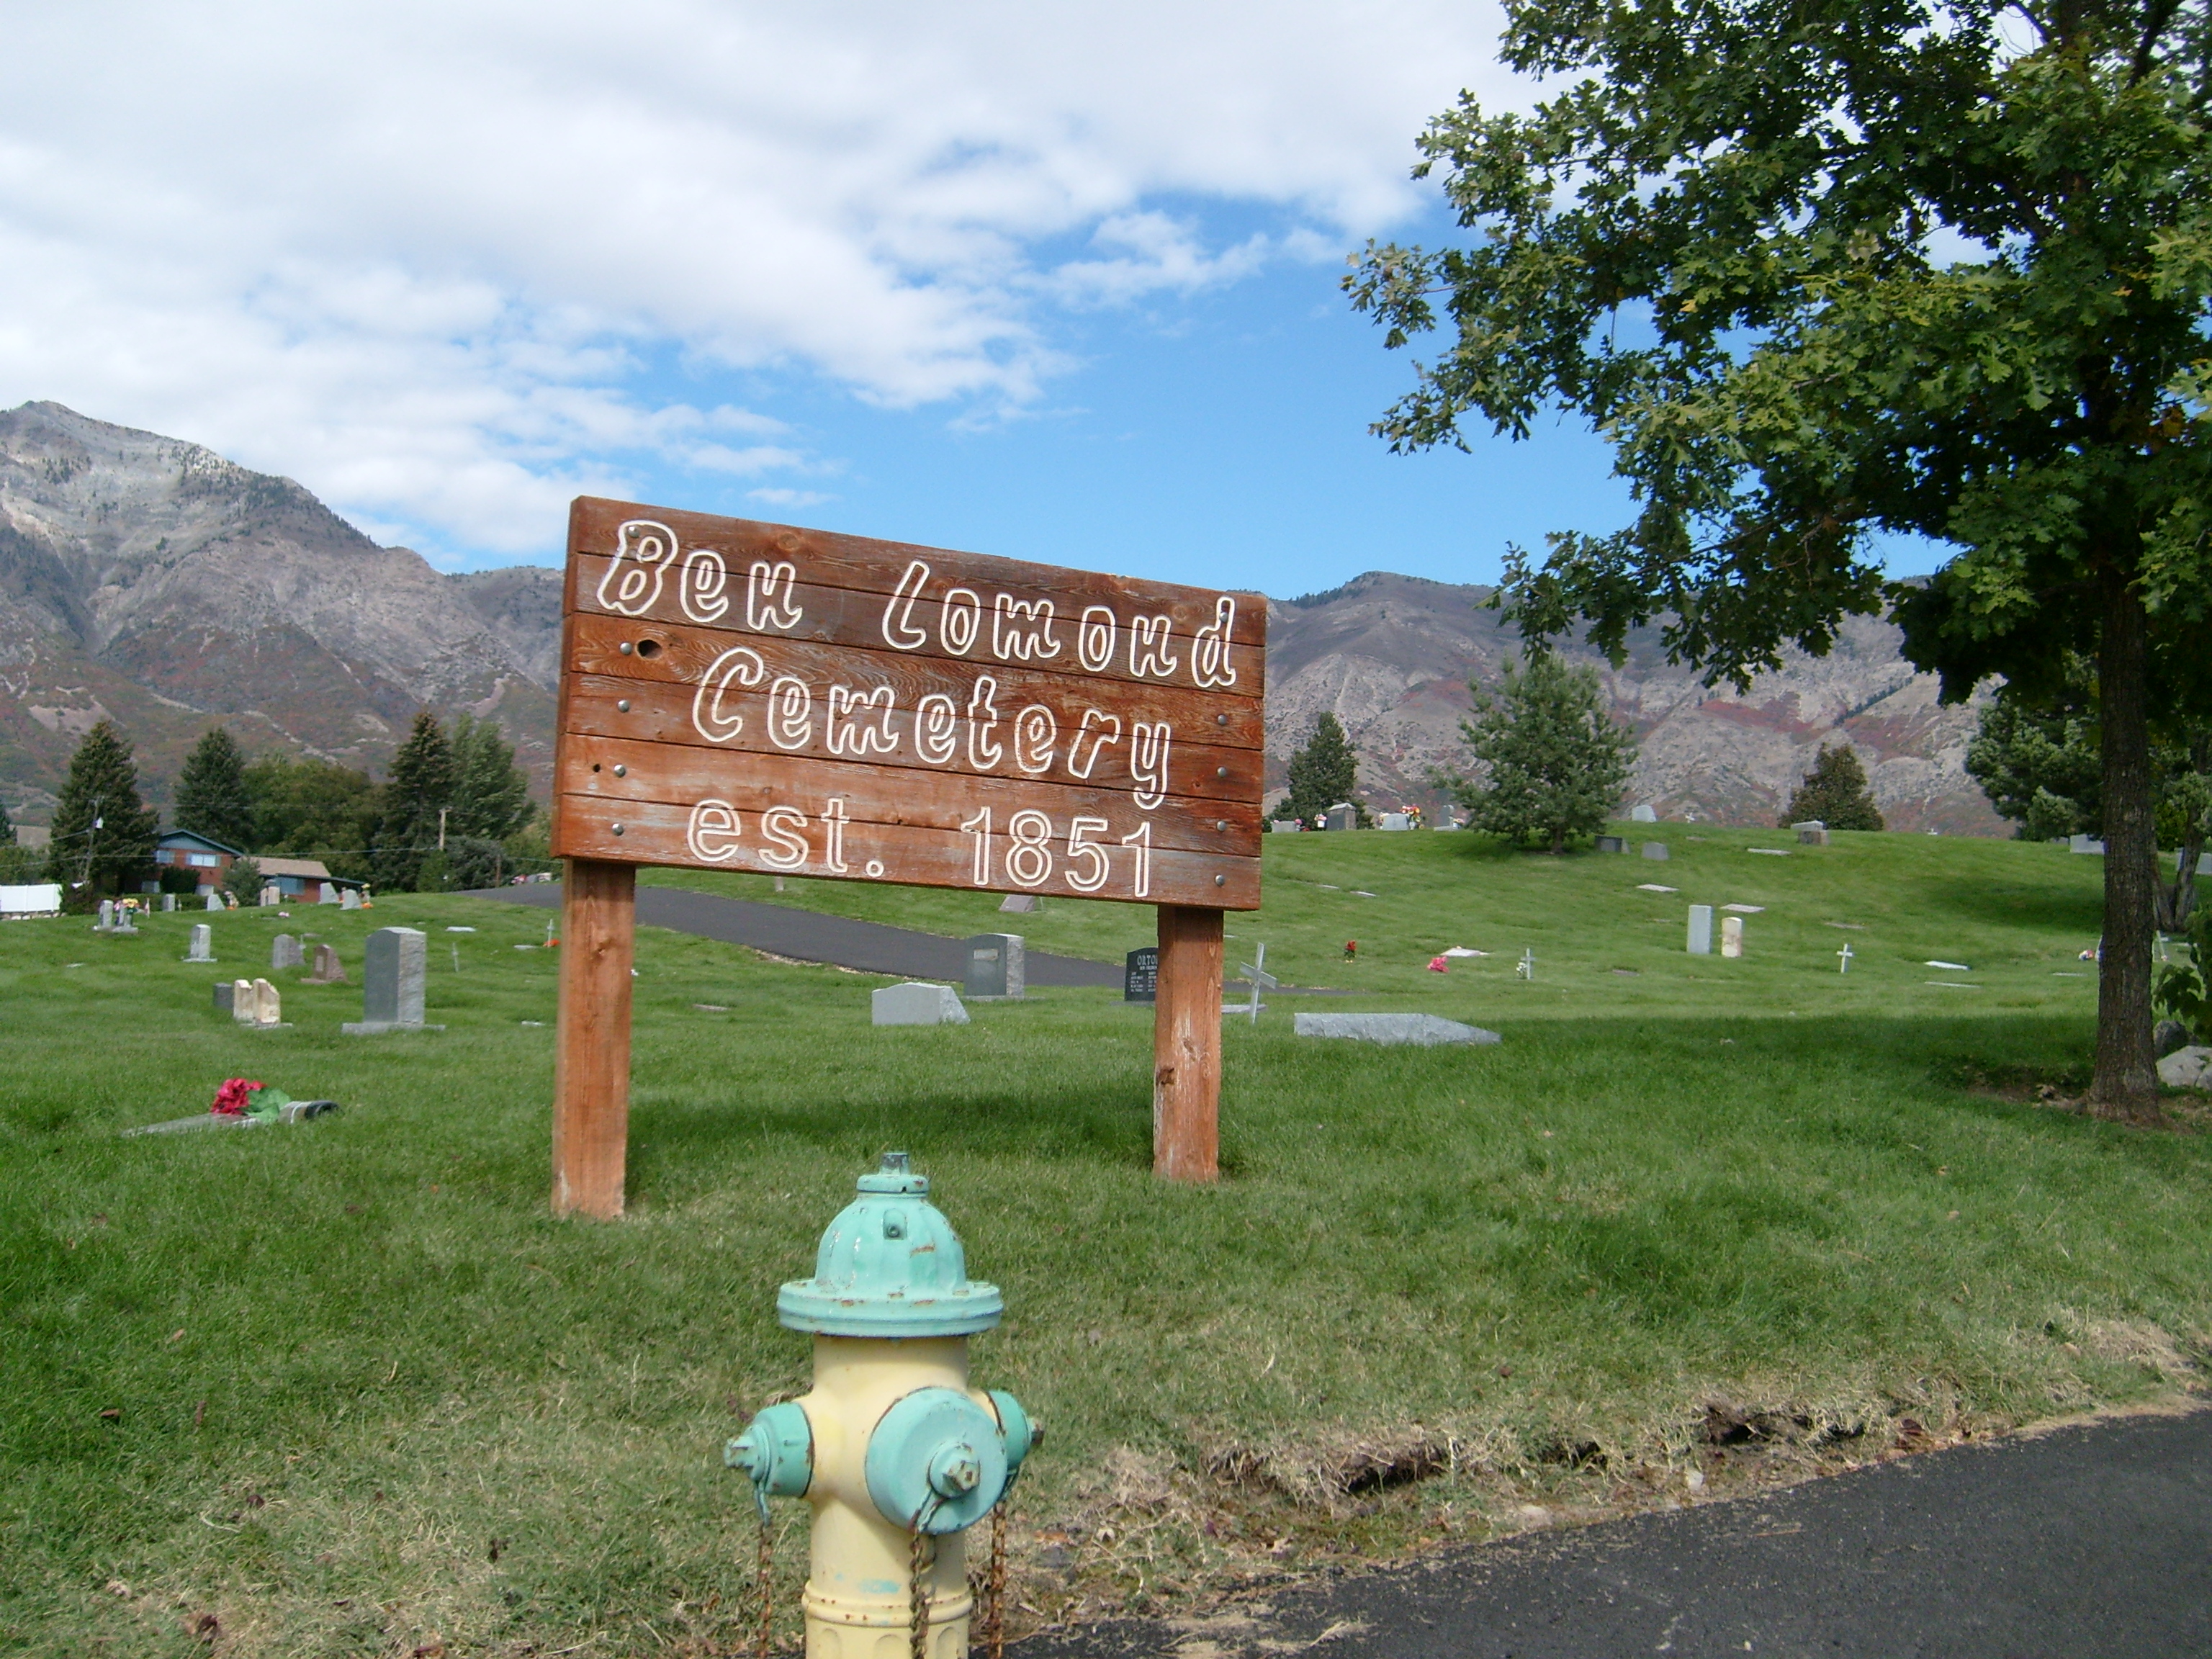 Ben Lomond Cemetery